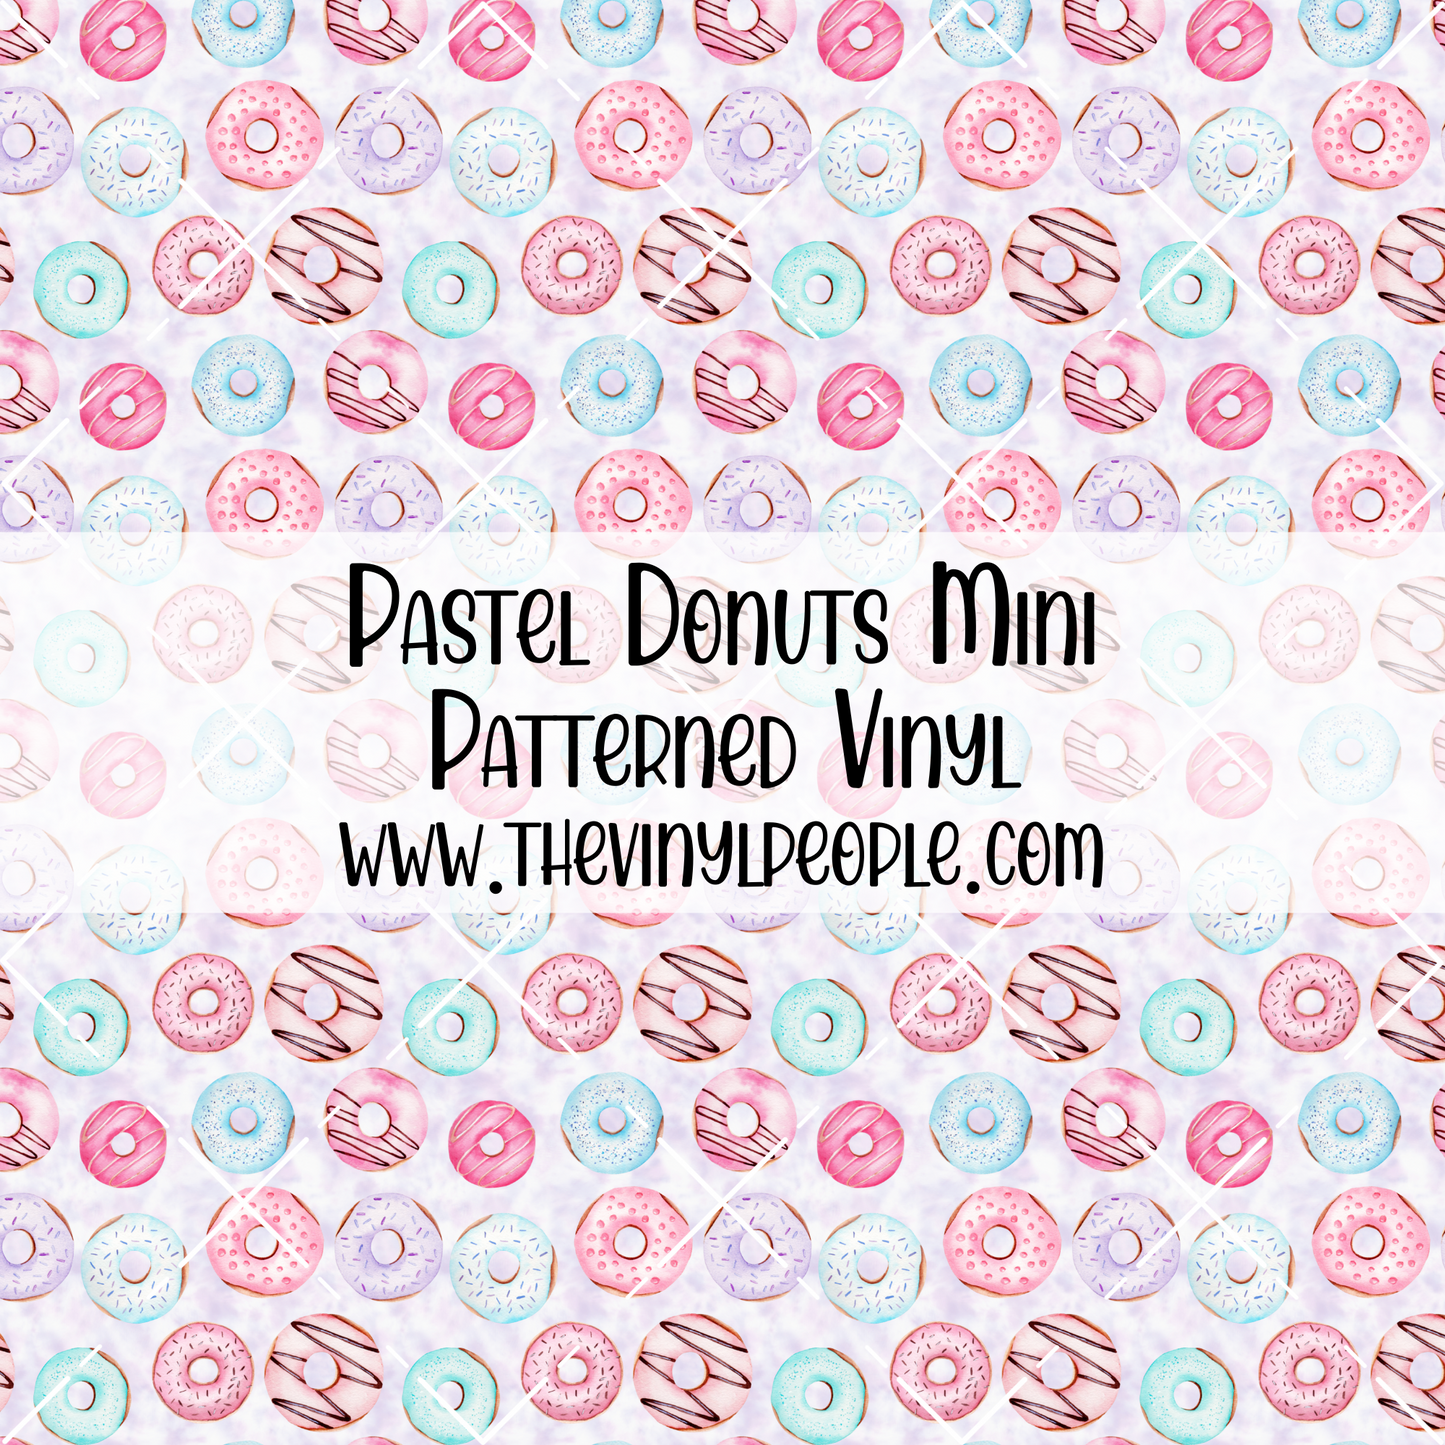 Pastel Donuts Patterned Vinyl